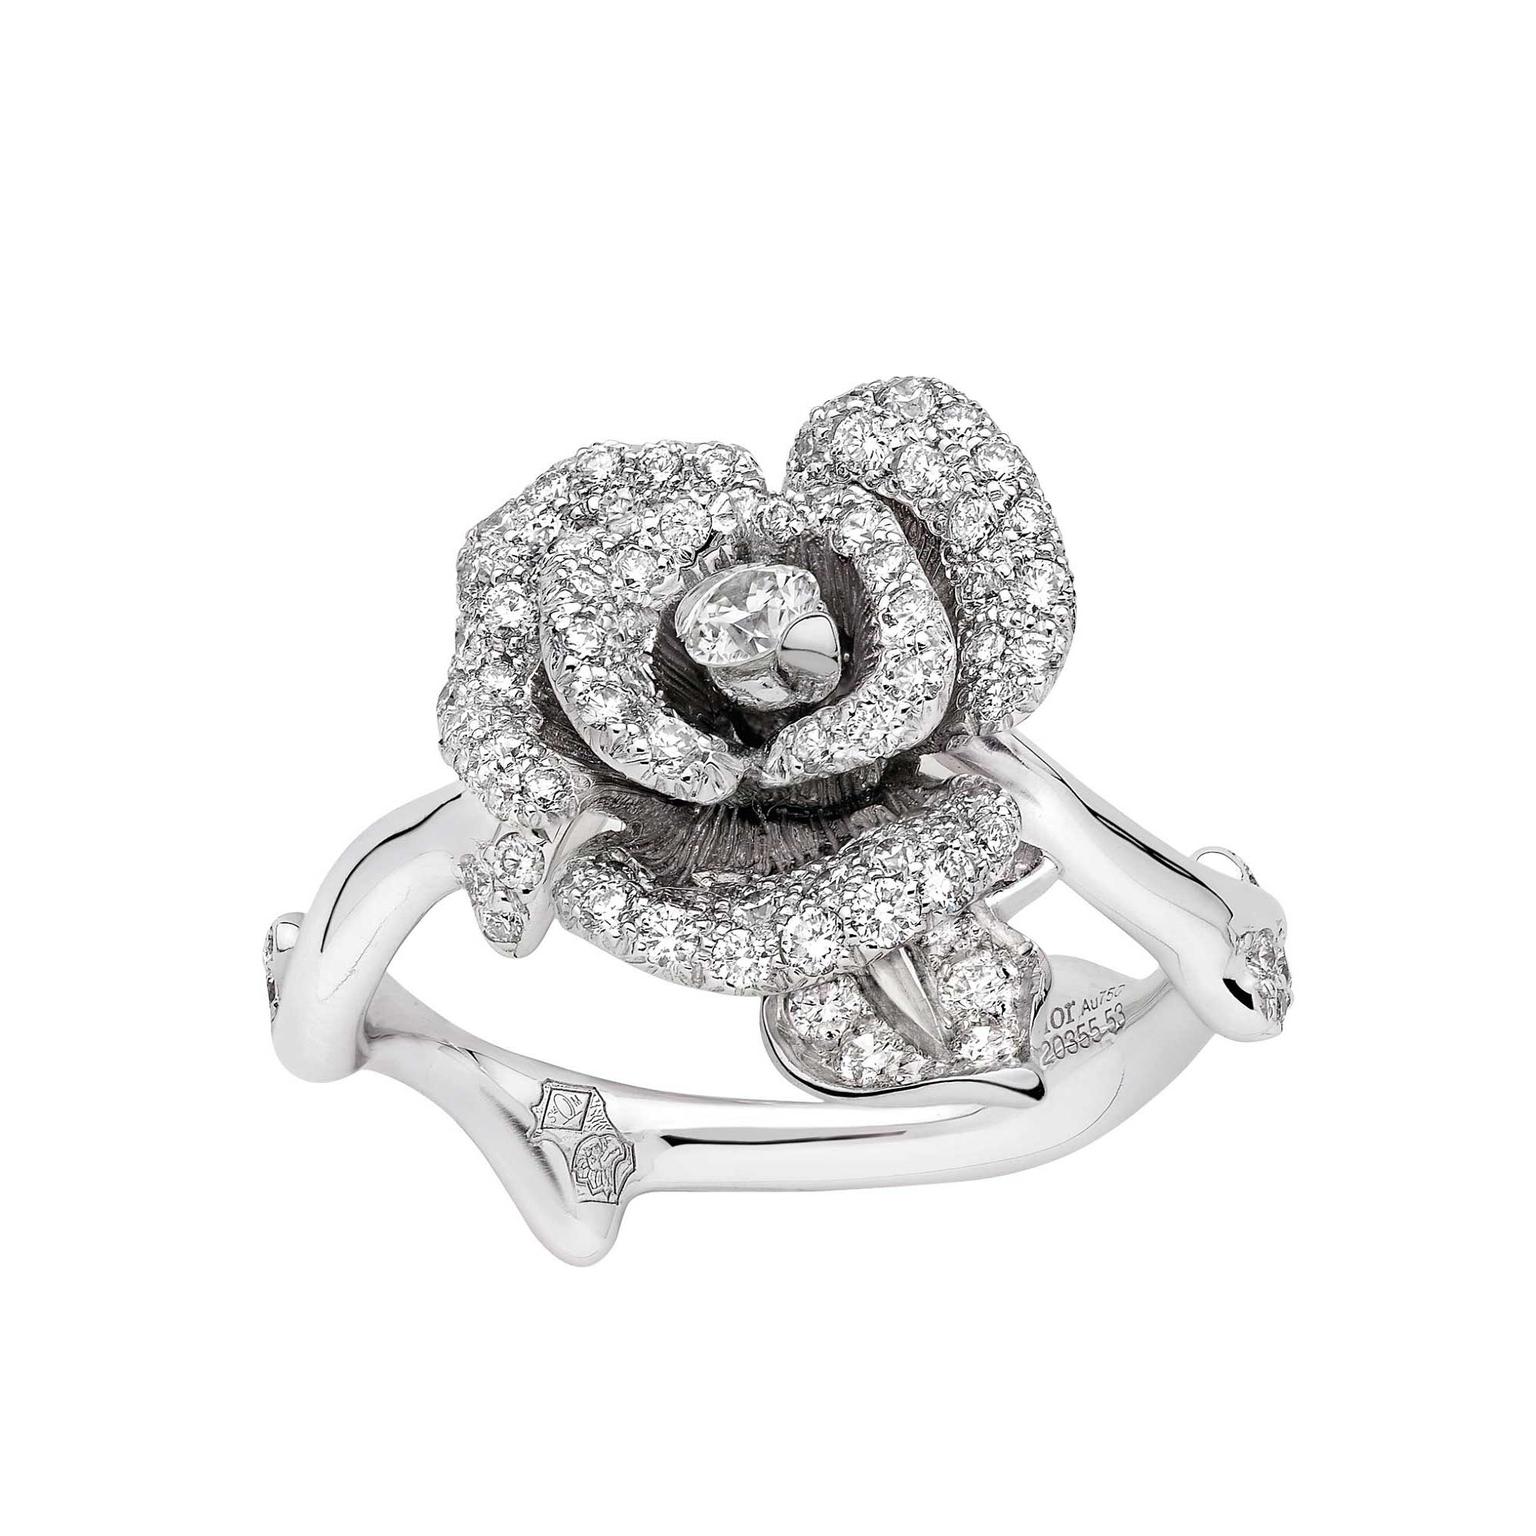 Rose Dior Bagatelle diamond ring in 